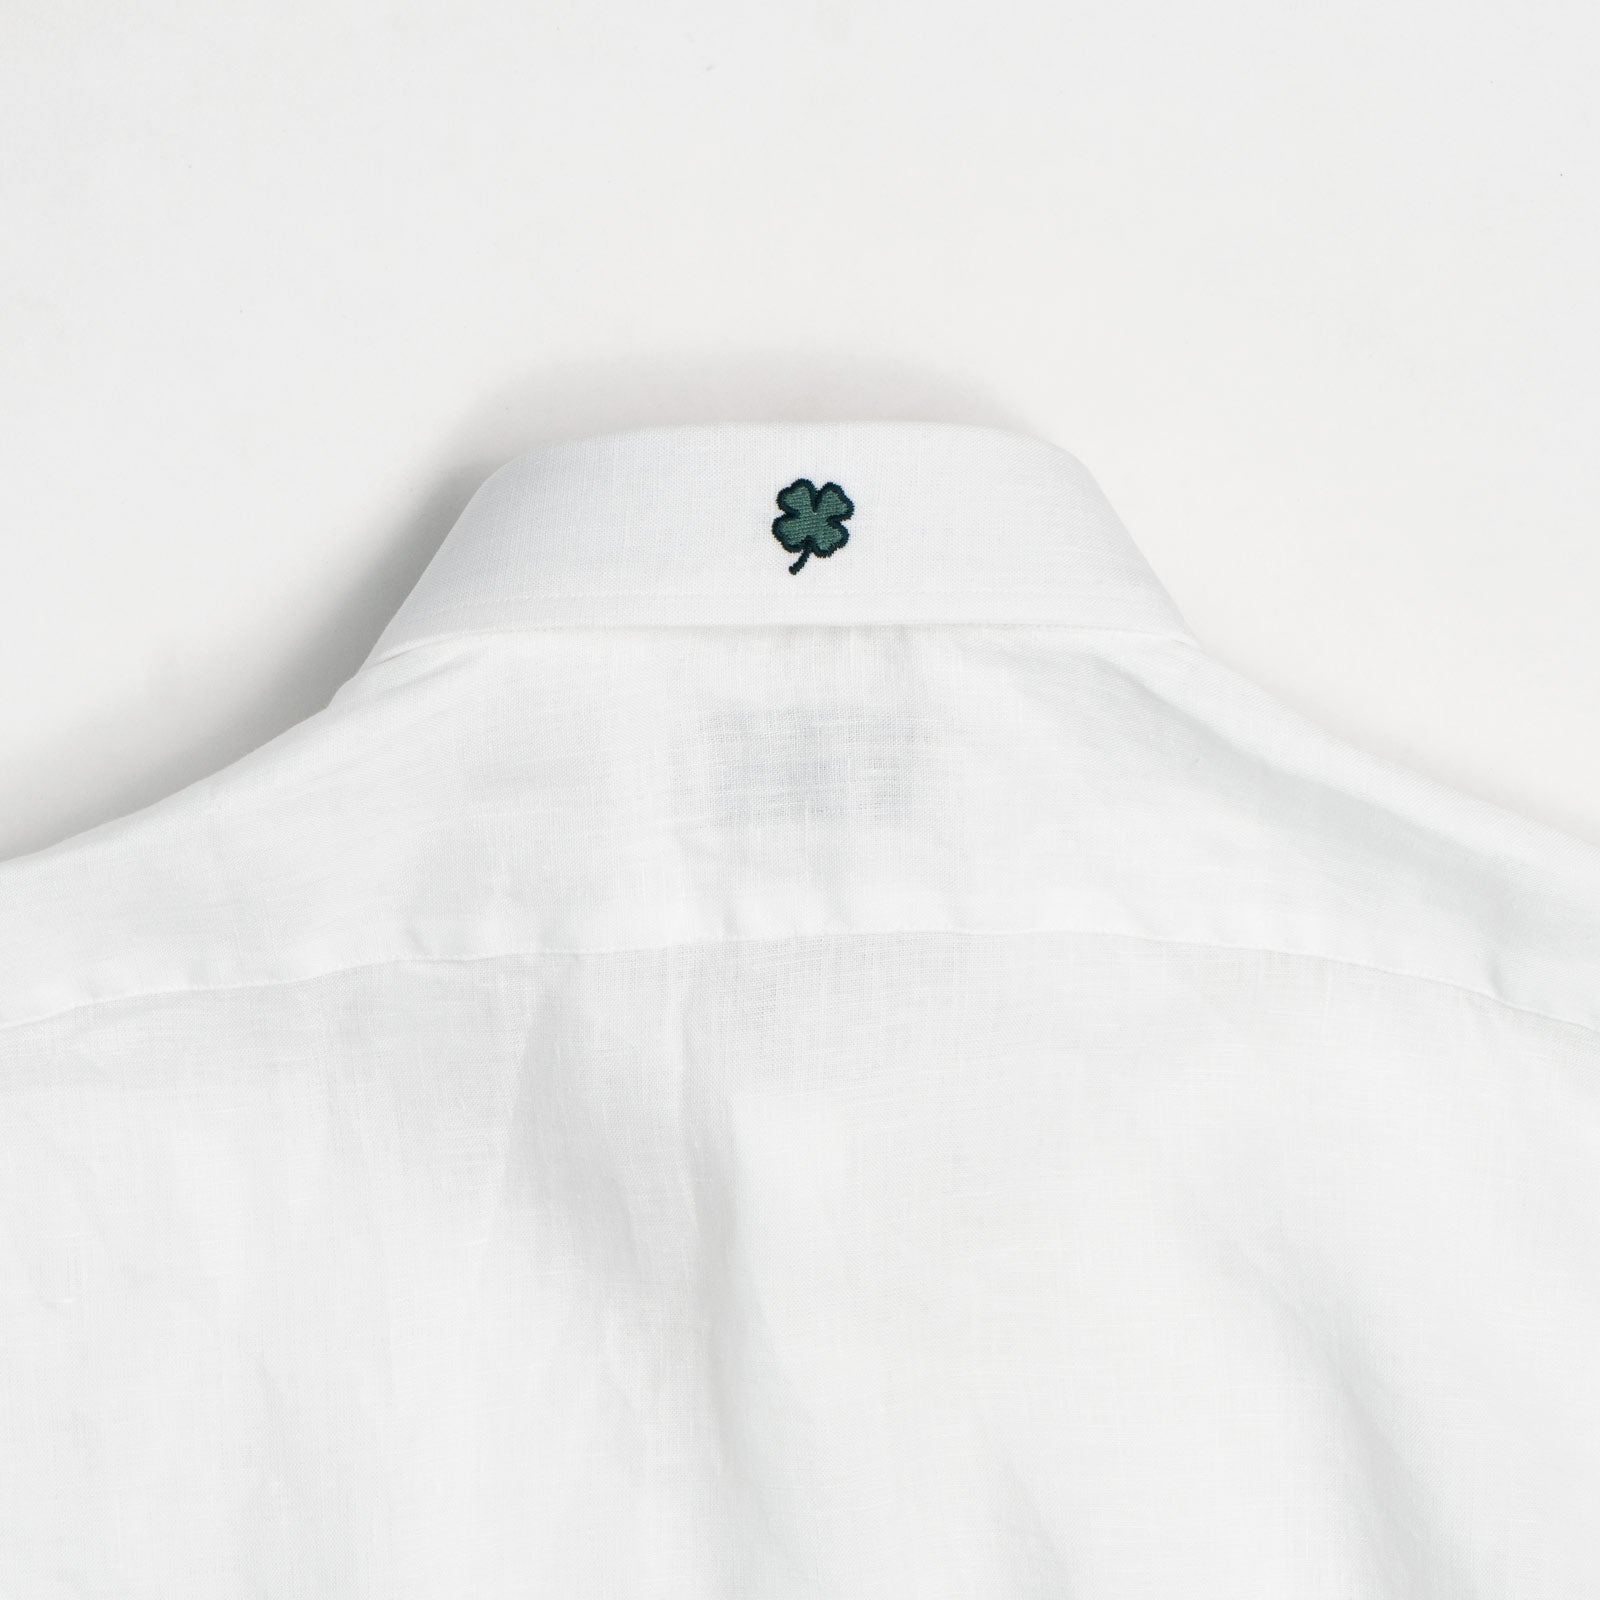 100% Linen Shirt - White